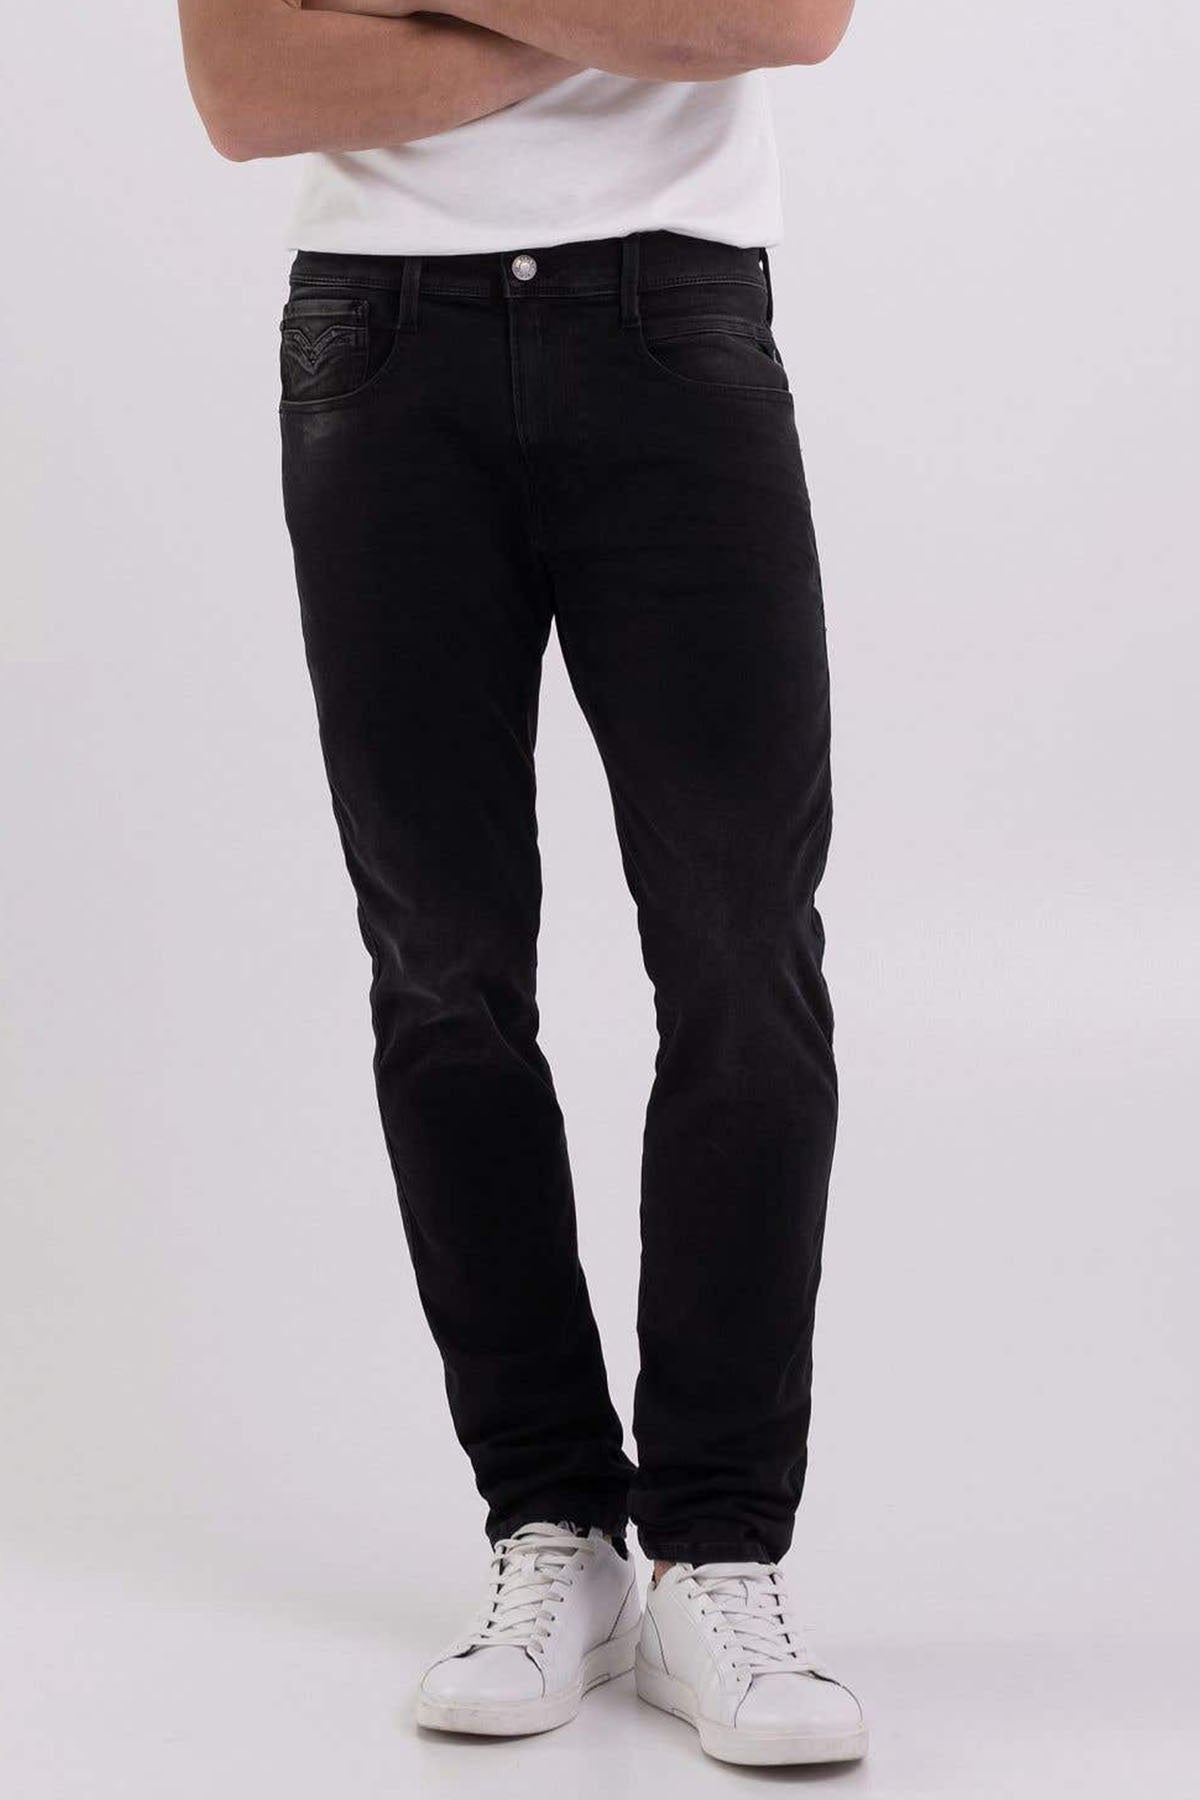 Replay Anbass Hyperflex Slim Fit Jeans-Libas Trendy Fashion Store